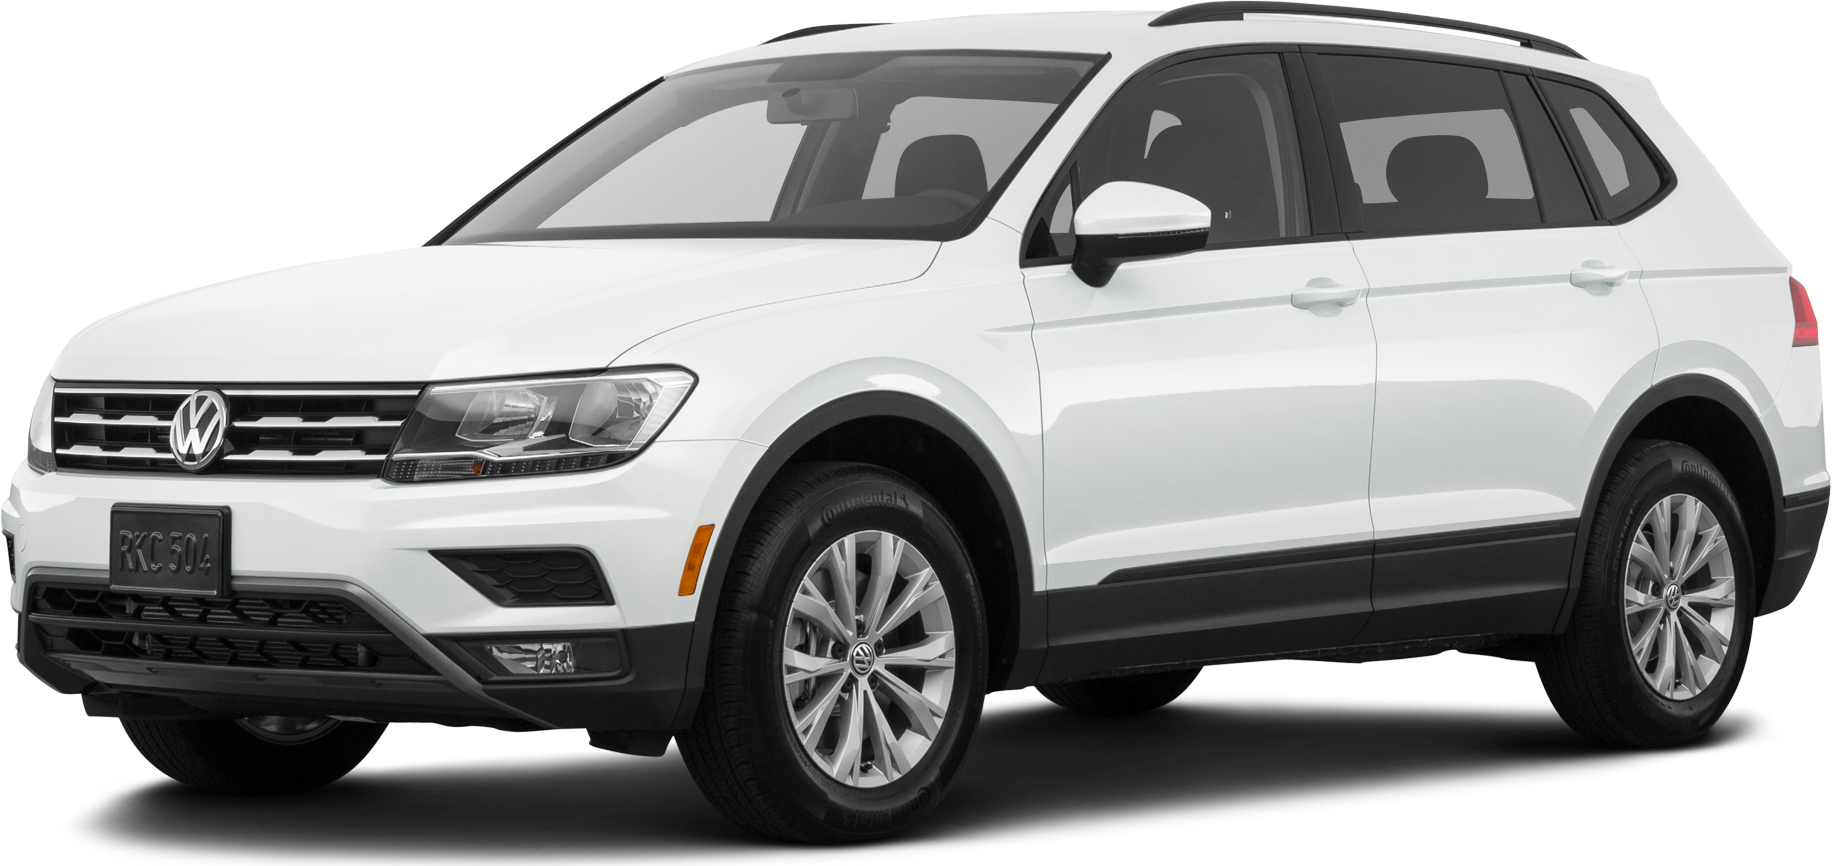 2018 Volkswagen Tiguan Price, Value, Ratings & Reviews